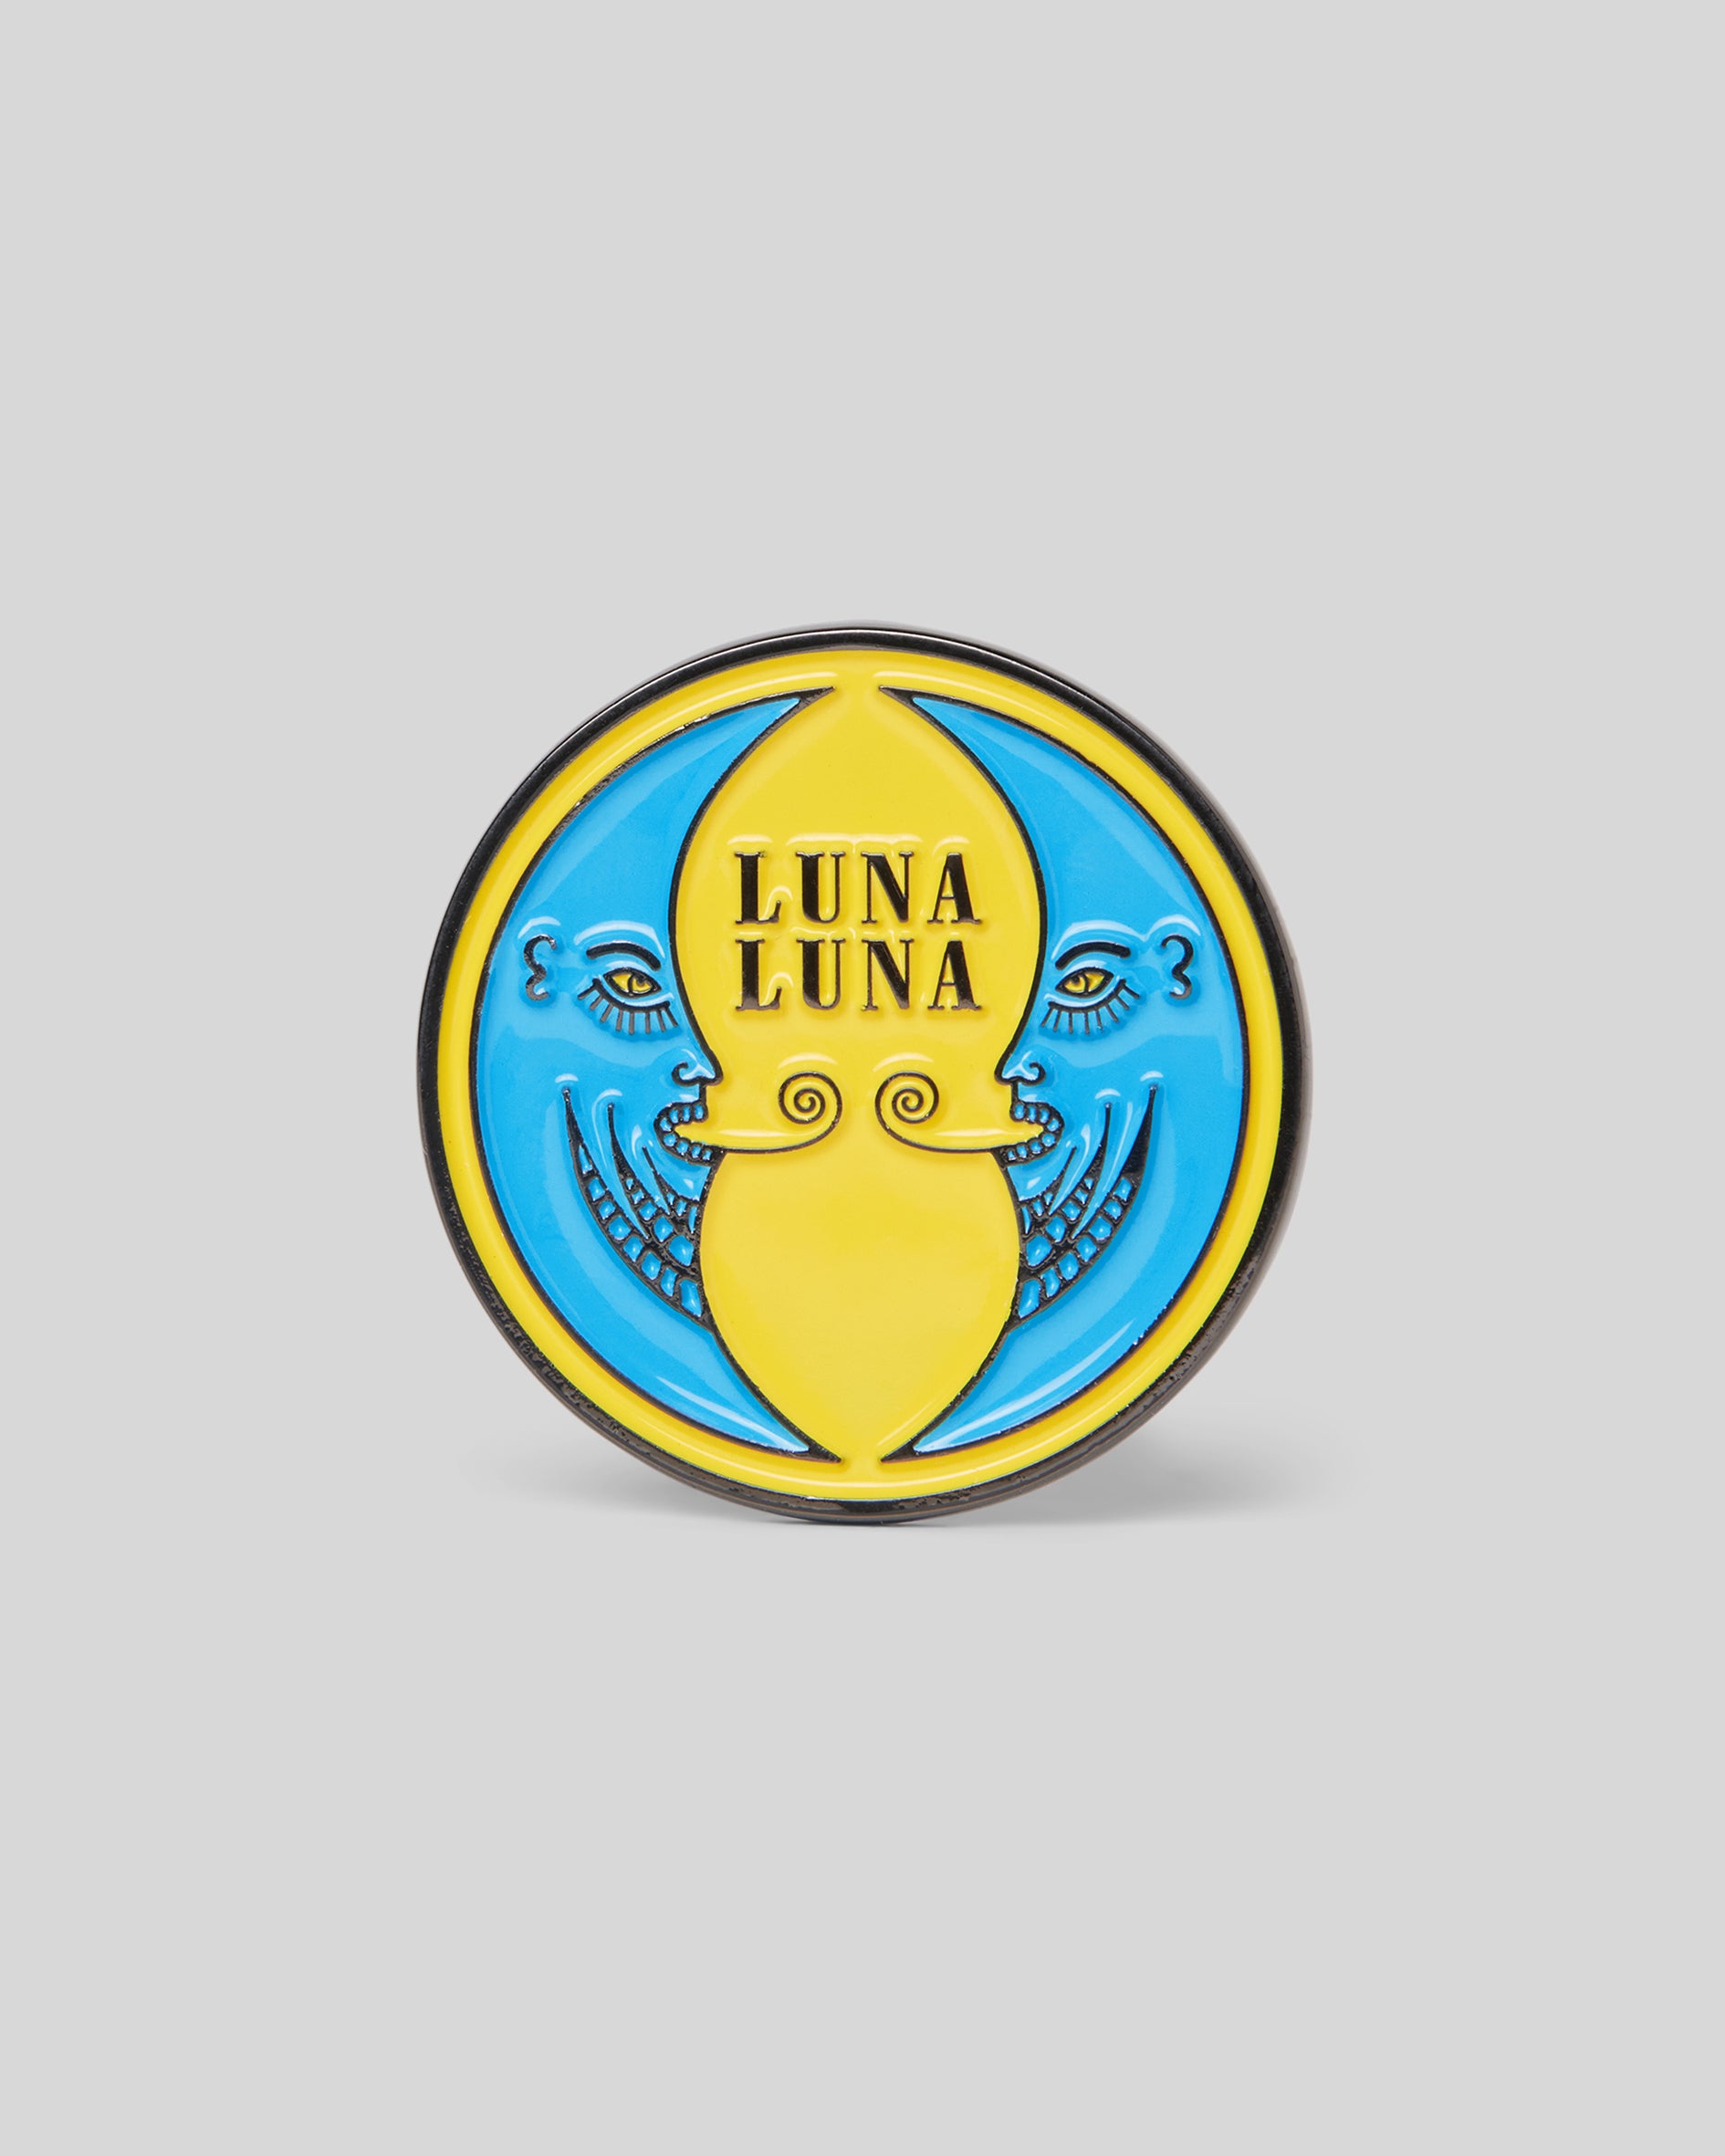 1987 Moon Enamel Pin. Blue and yellow metal double moon logo pin.